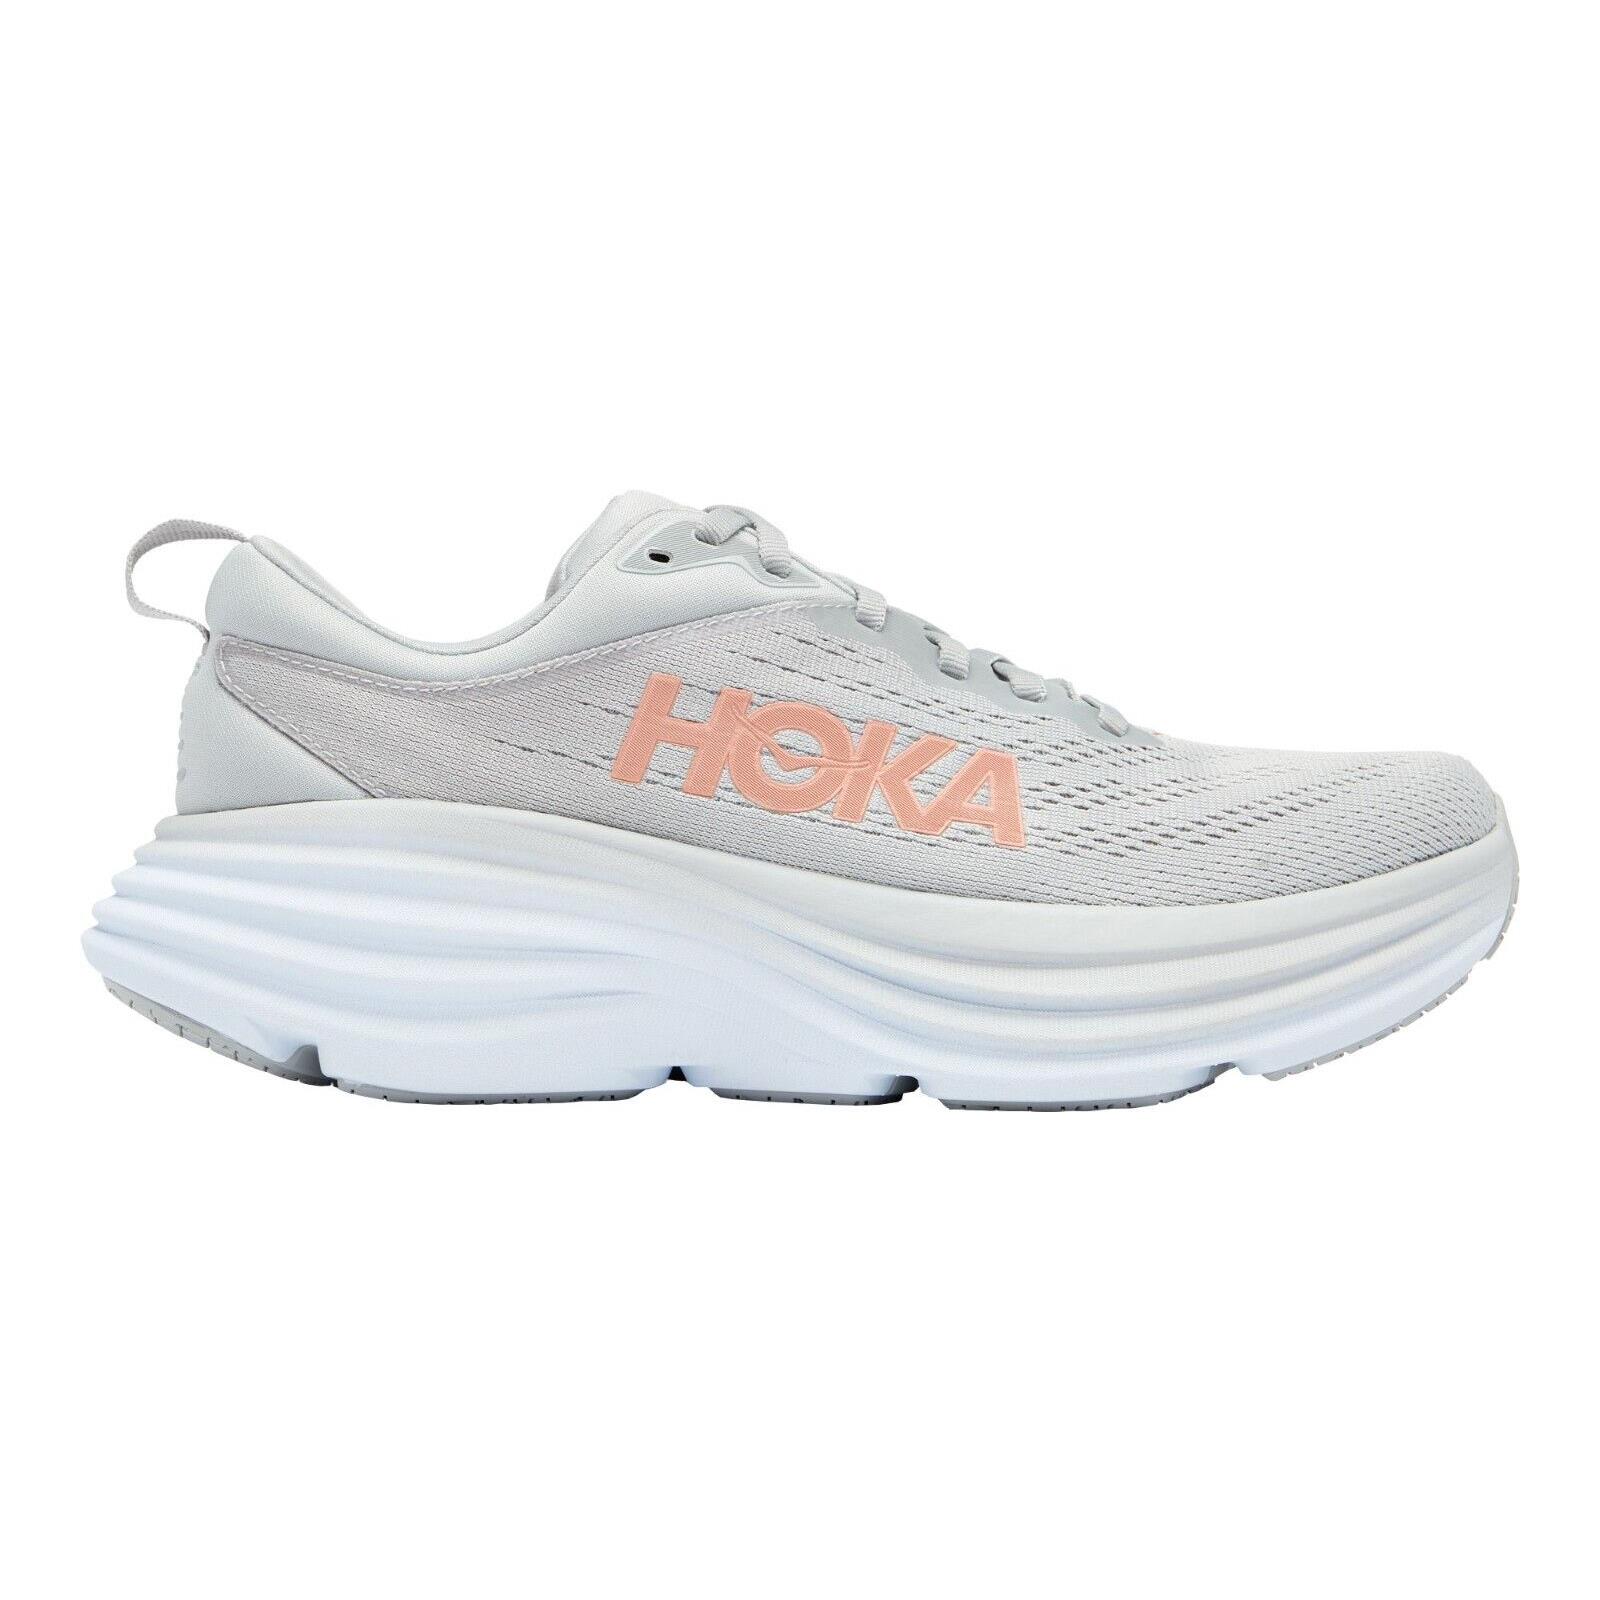 Hoka One One Bondi 8 Women`s Running Shoes All Colors US Sizes 6-11 Harbor Mist/Lunar Rock